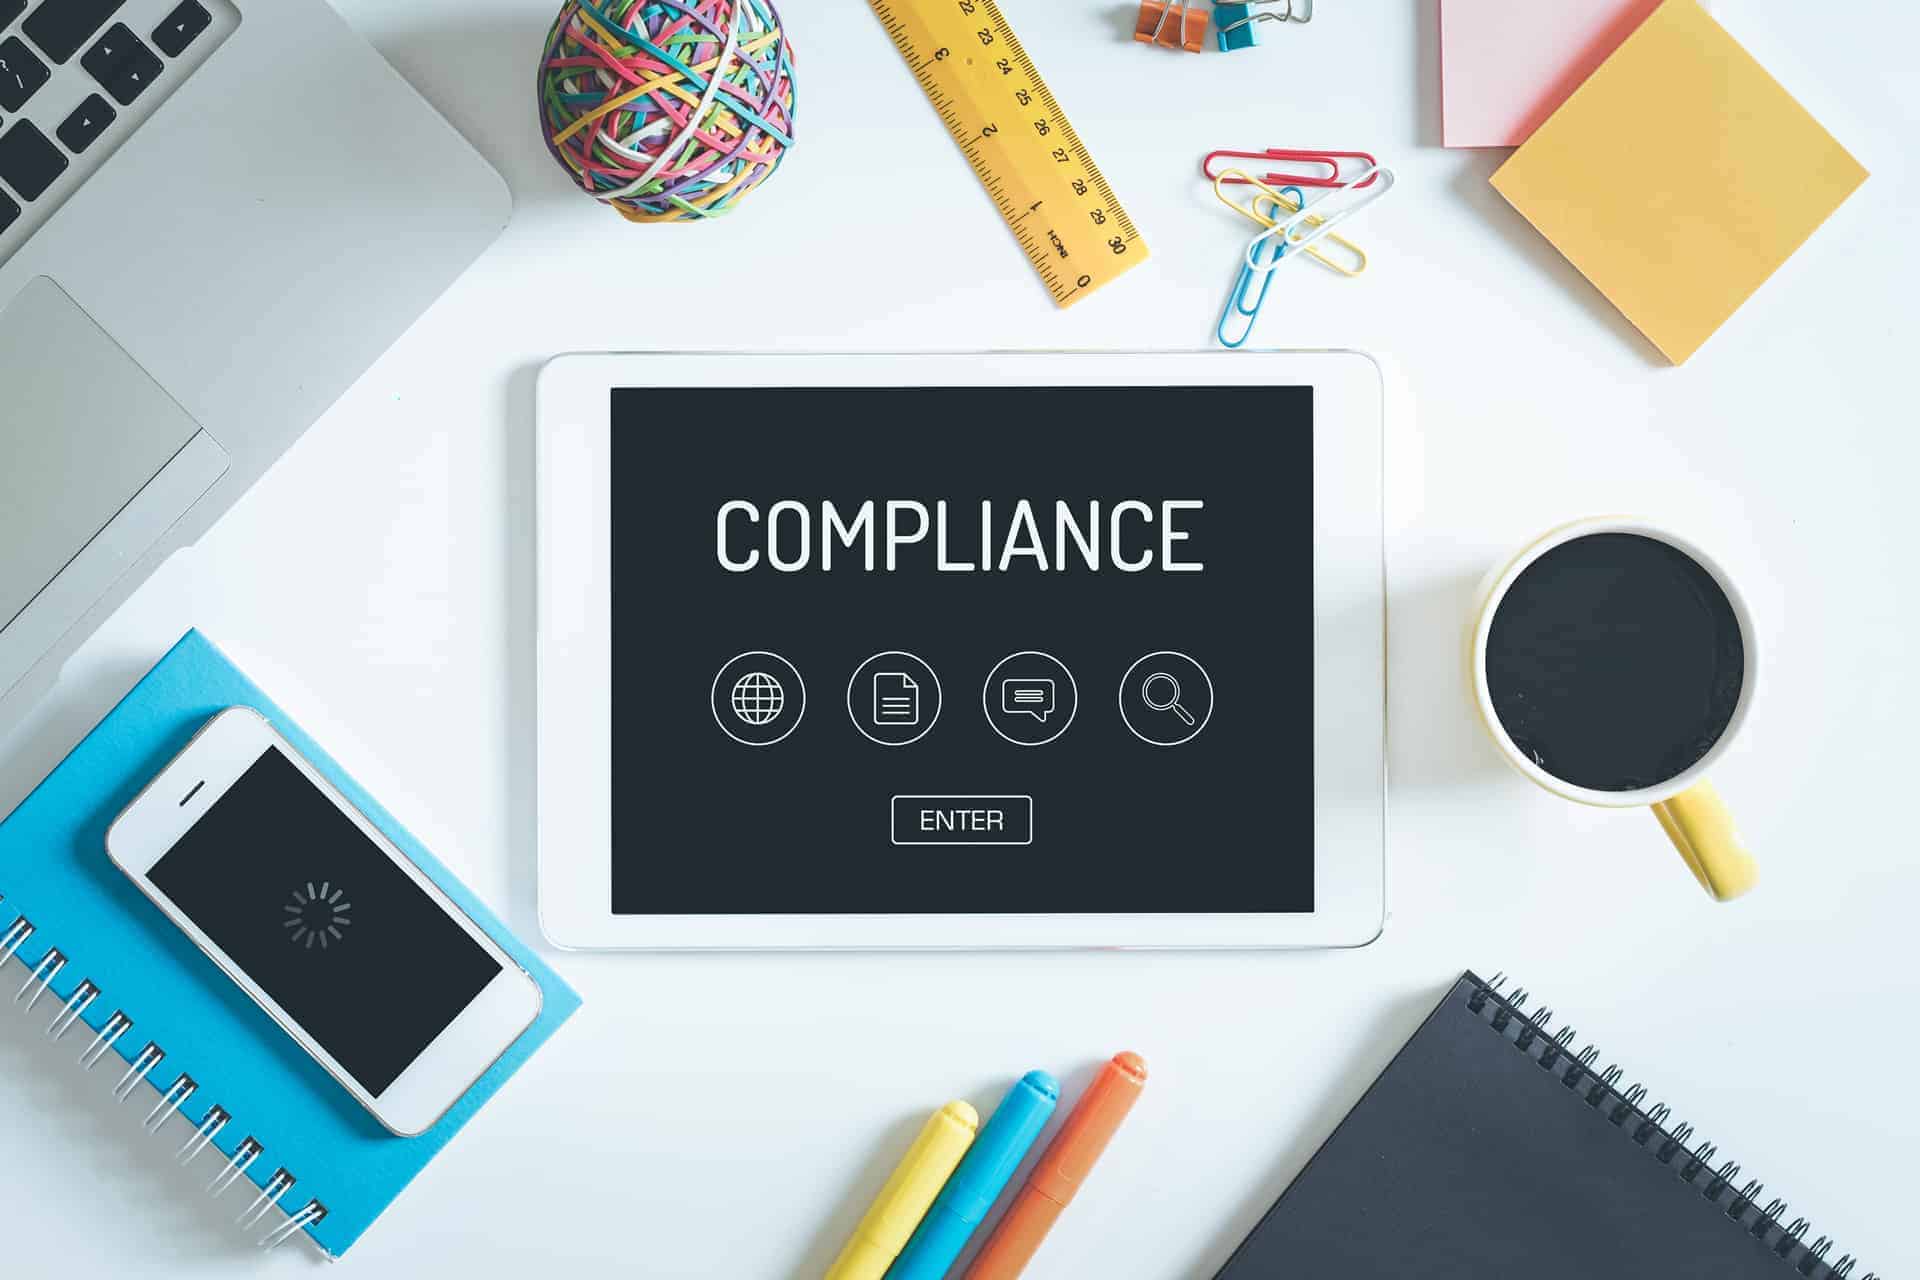 pci compliance vs certification